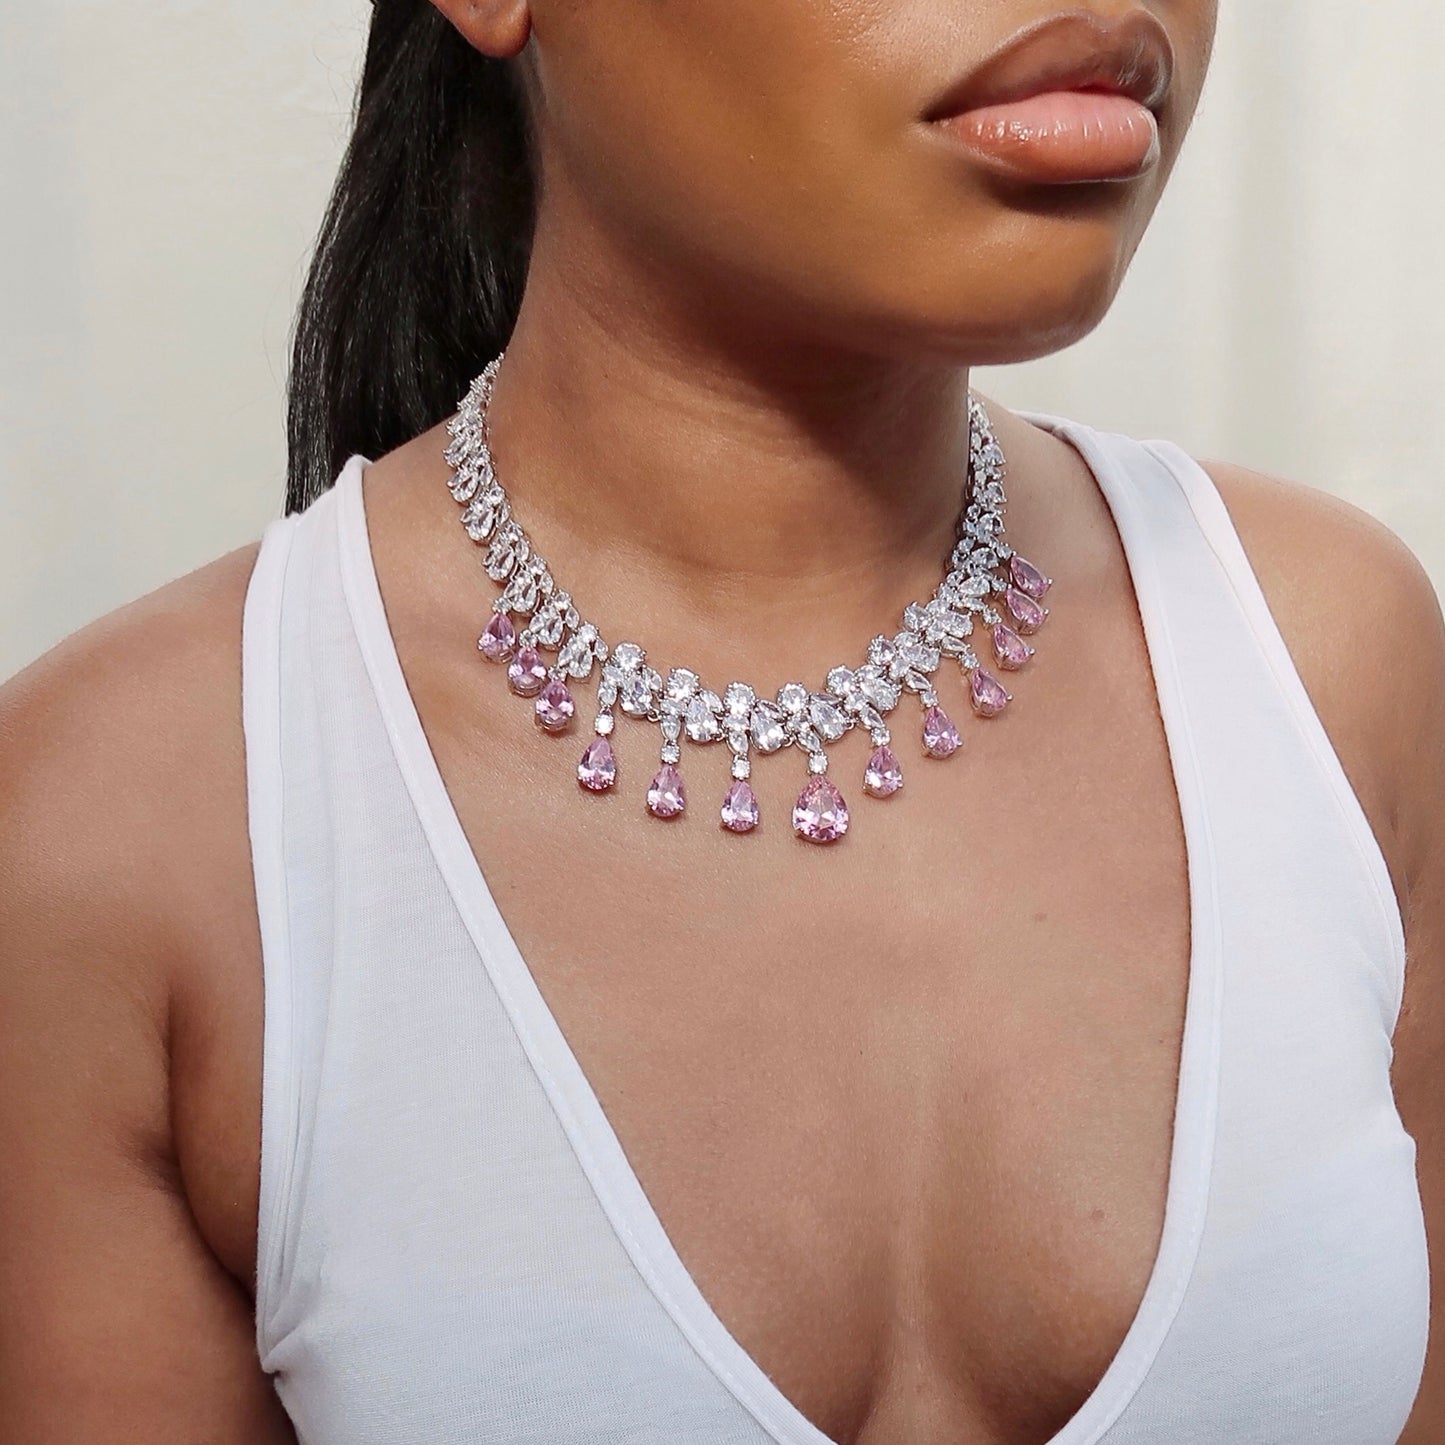 Dynasty Teardrop Cluster Silver Necklace - Pink